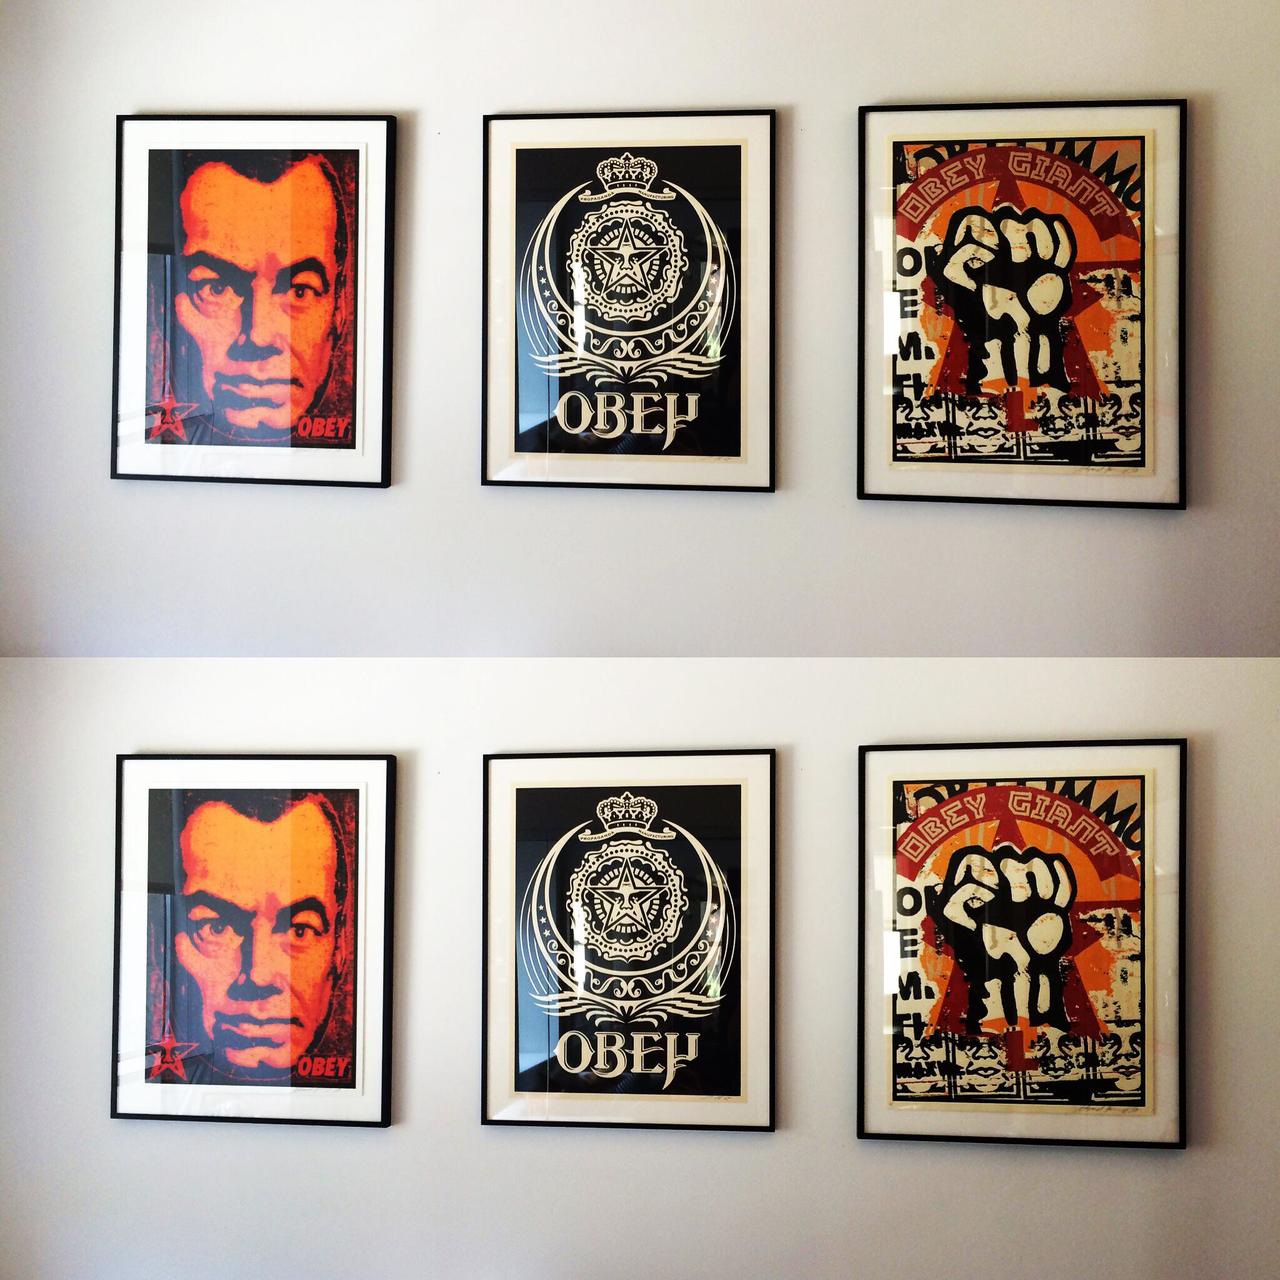 RT @OdysseusArms: OBEY Prints in the OA Office. #shepardfairey #streetart #art #OBEY #style #design #graffiti  https://instagram.com/p/6ih03RTWaI/?taken-by=odysseusarms http://t.co/B3bmixDwVj